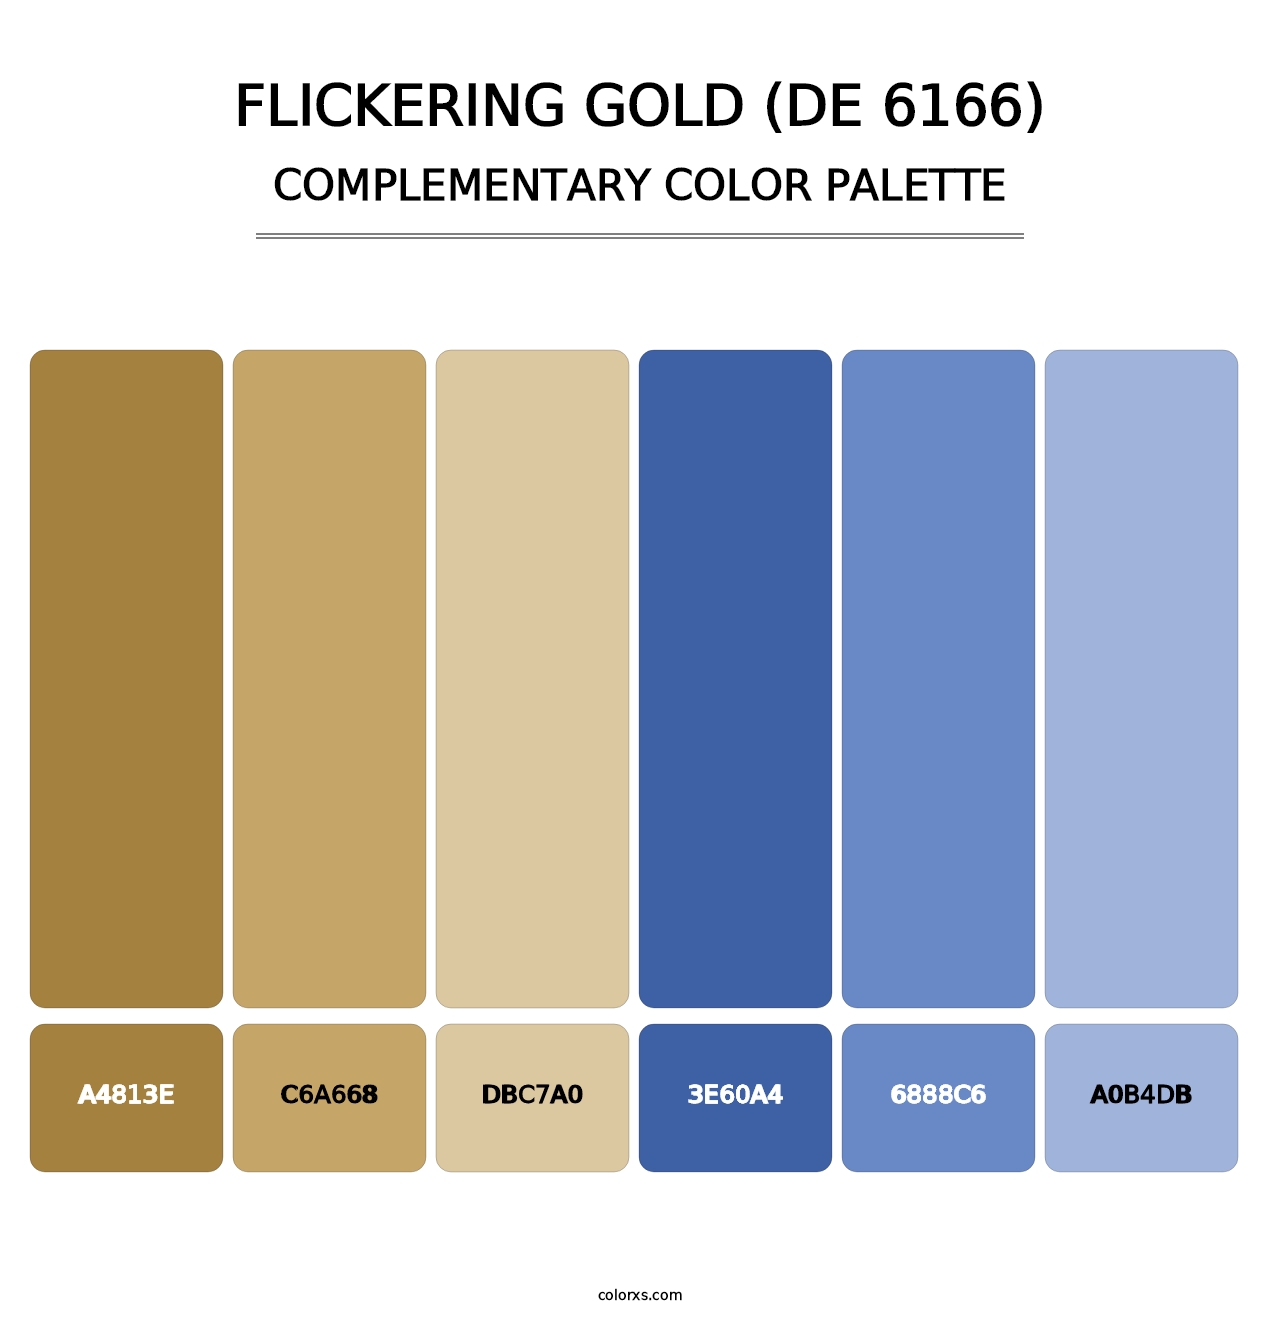 Flickering Gold (DE 6166) - Complementary Color Palette